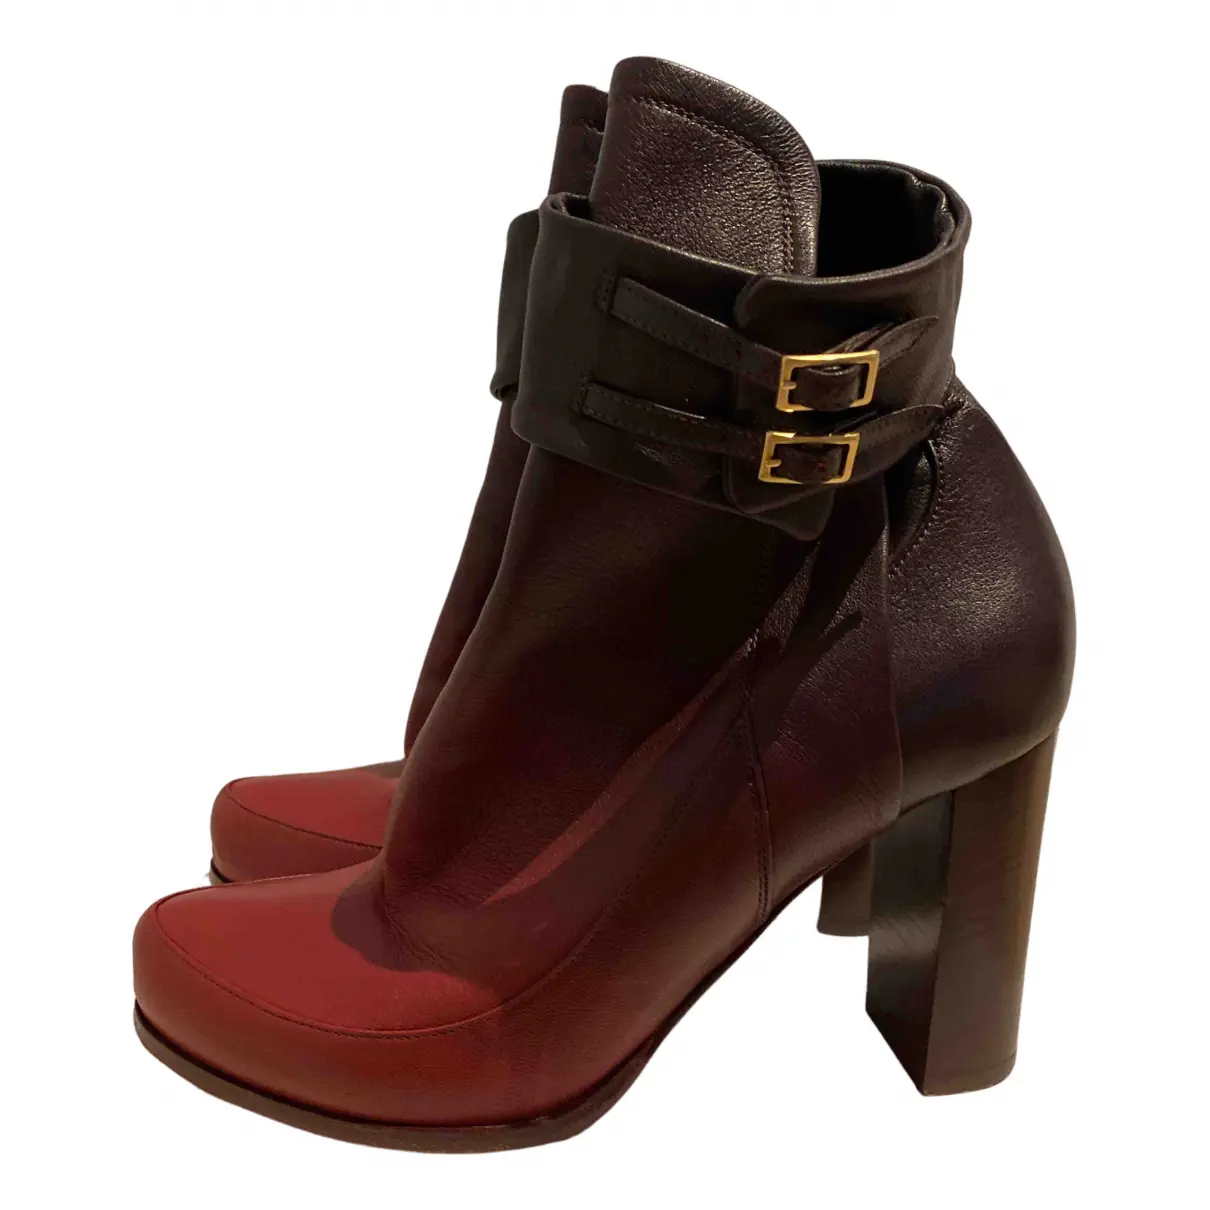 Leather riding boots Nina Ricci